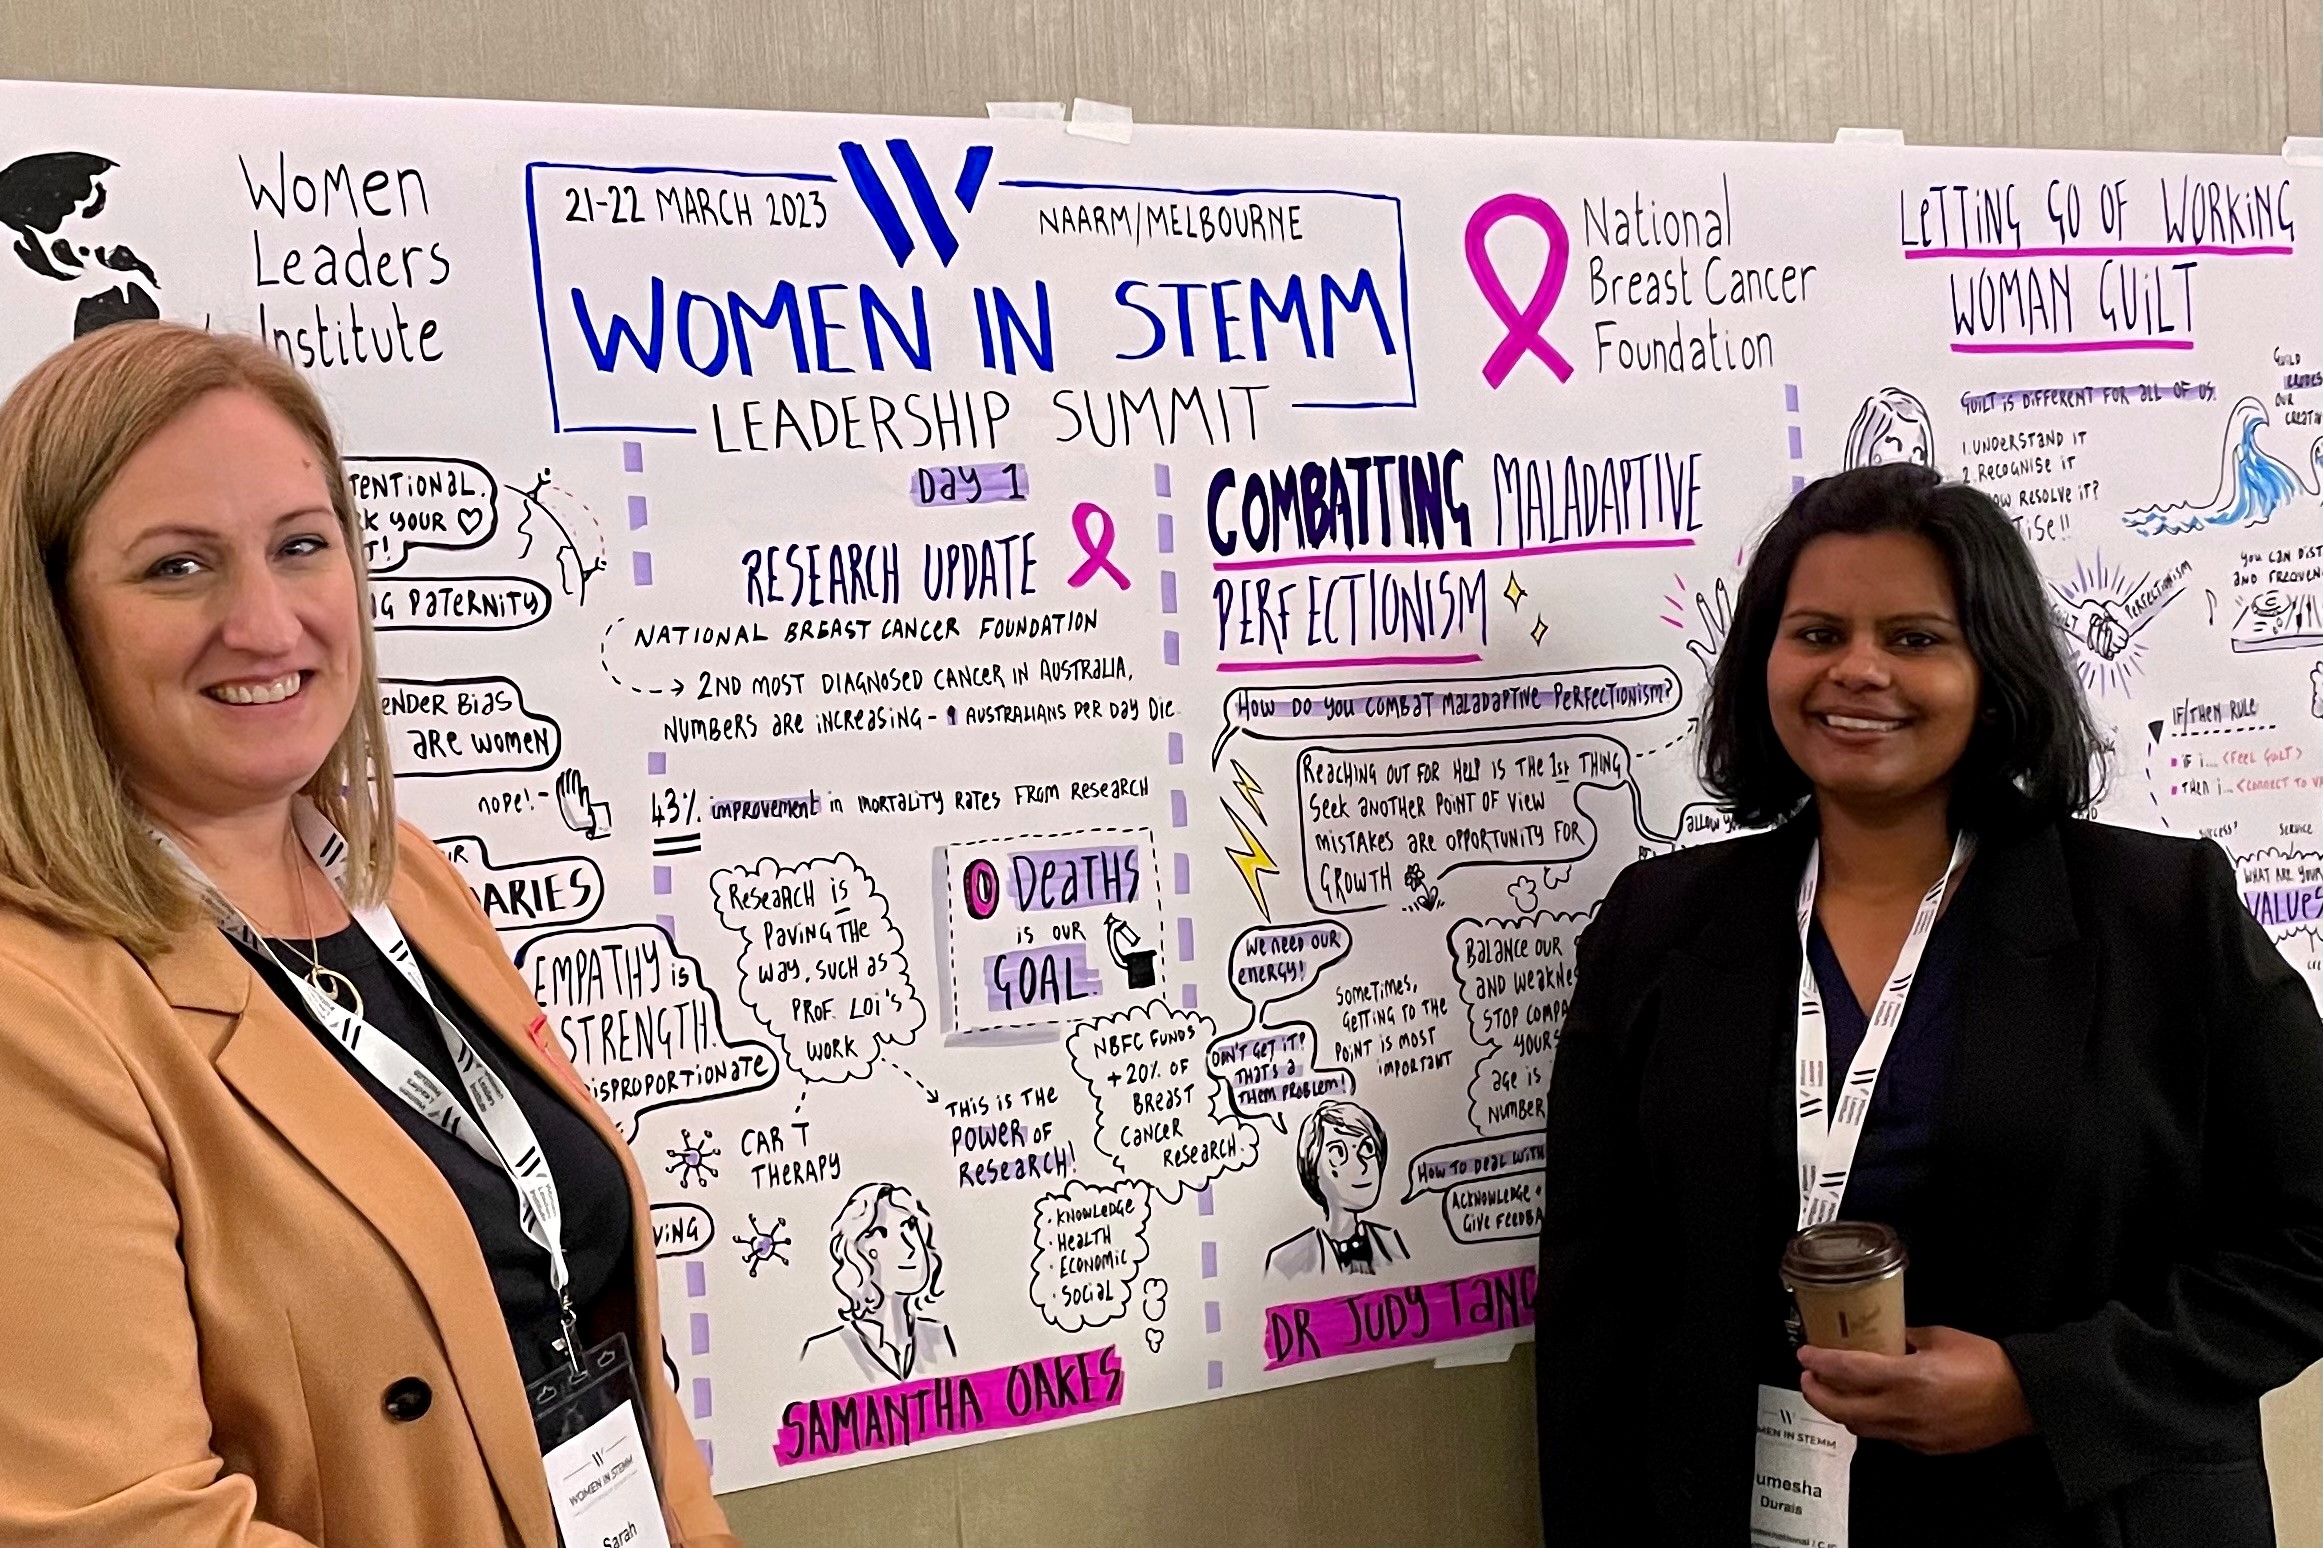 Empowering Women in STEMM: Insights from the Women in STEMM Leadership Summit